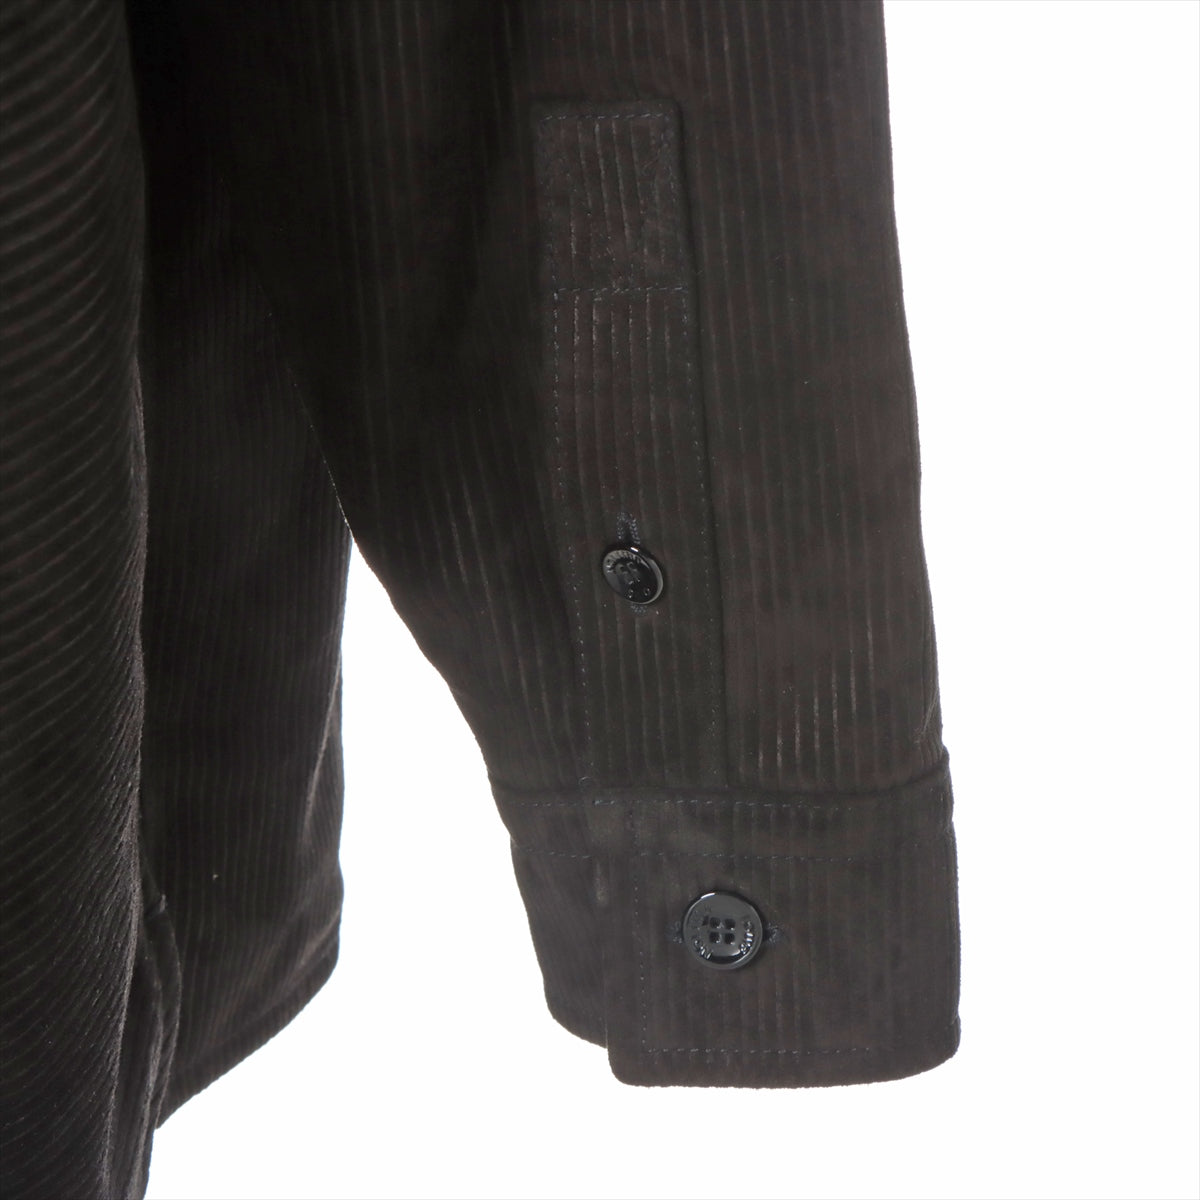 Louis Vuitton 24SS Leather Shirt 52 Men's Black  RM241M 1AFAG3 CORDUROY EFFECT SUEDE OVERSHIRT